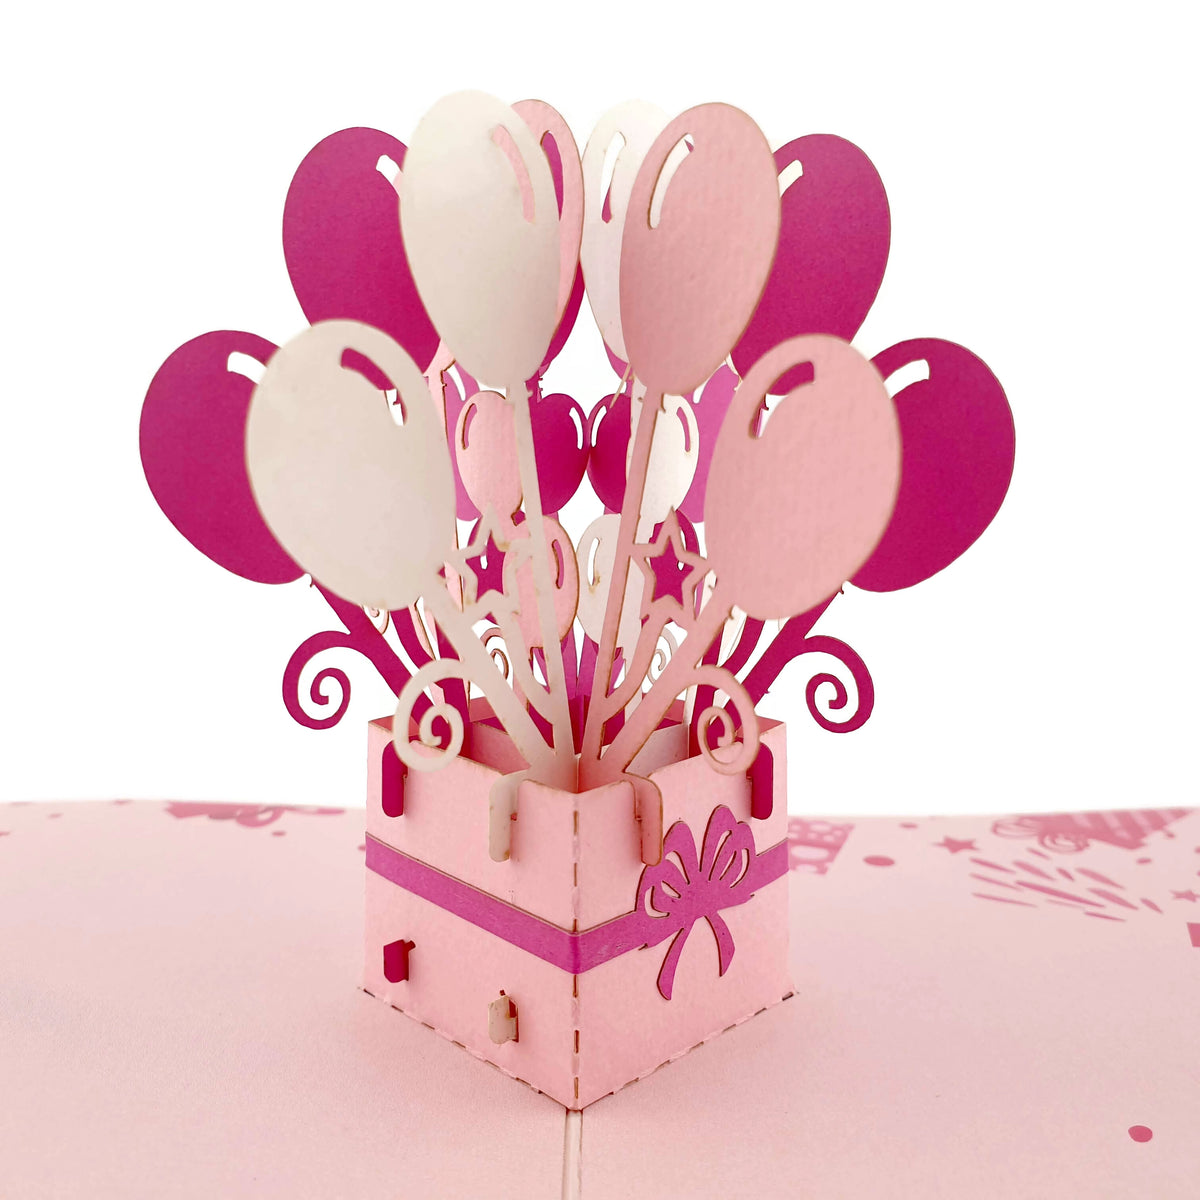 Pink Birthday Balloons Pop Up Card